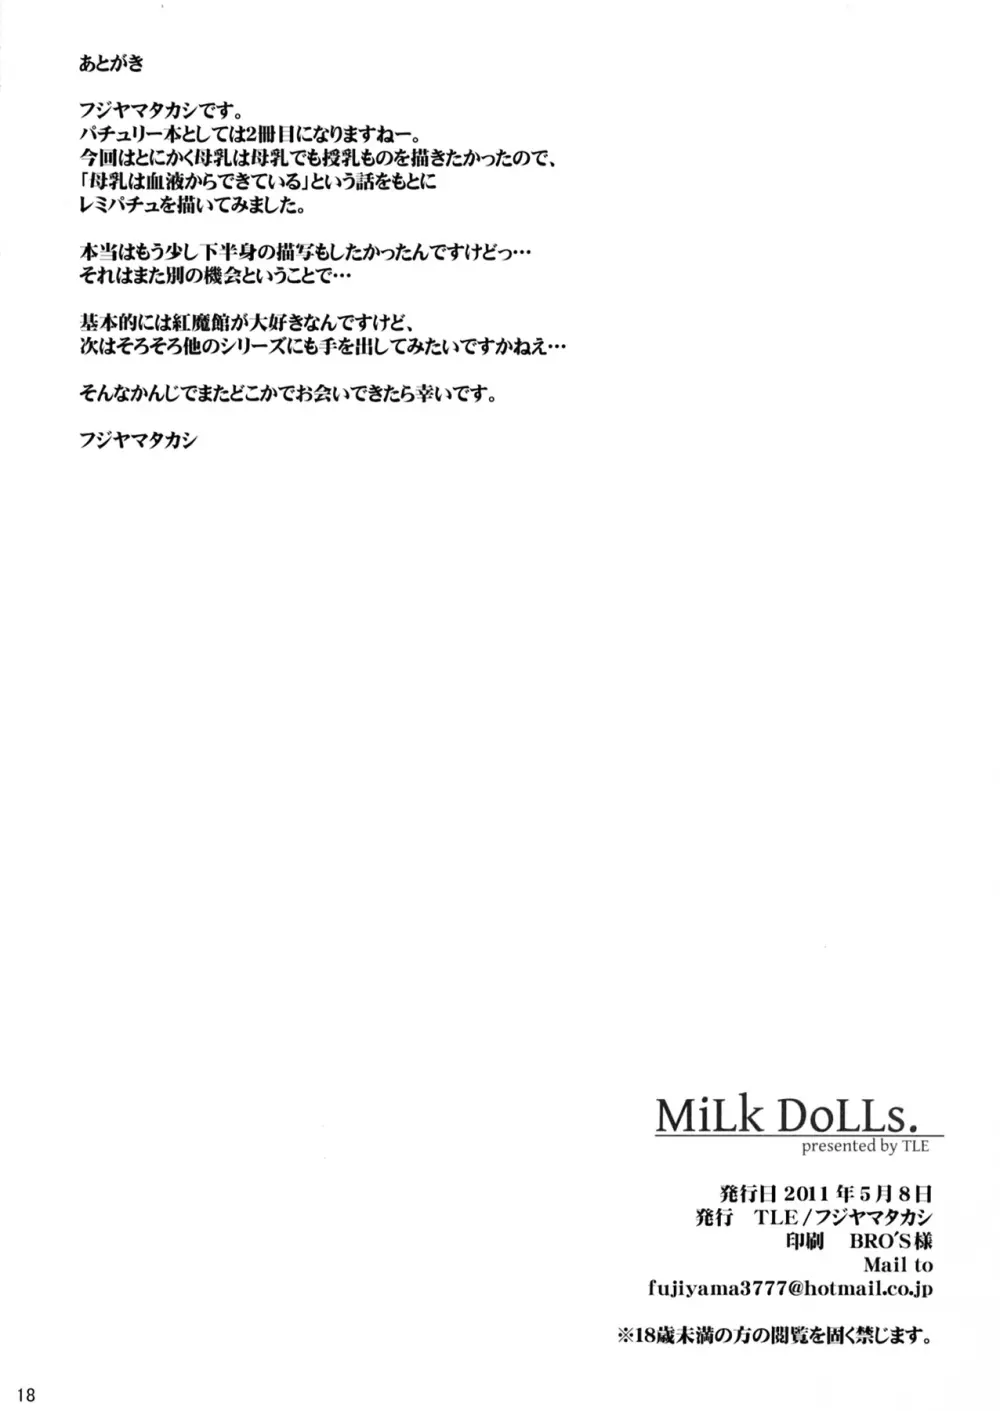 MiLK DoLLs 18ページ